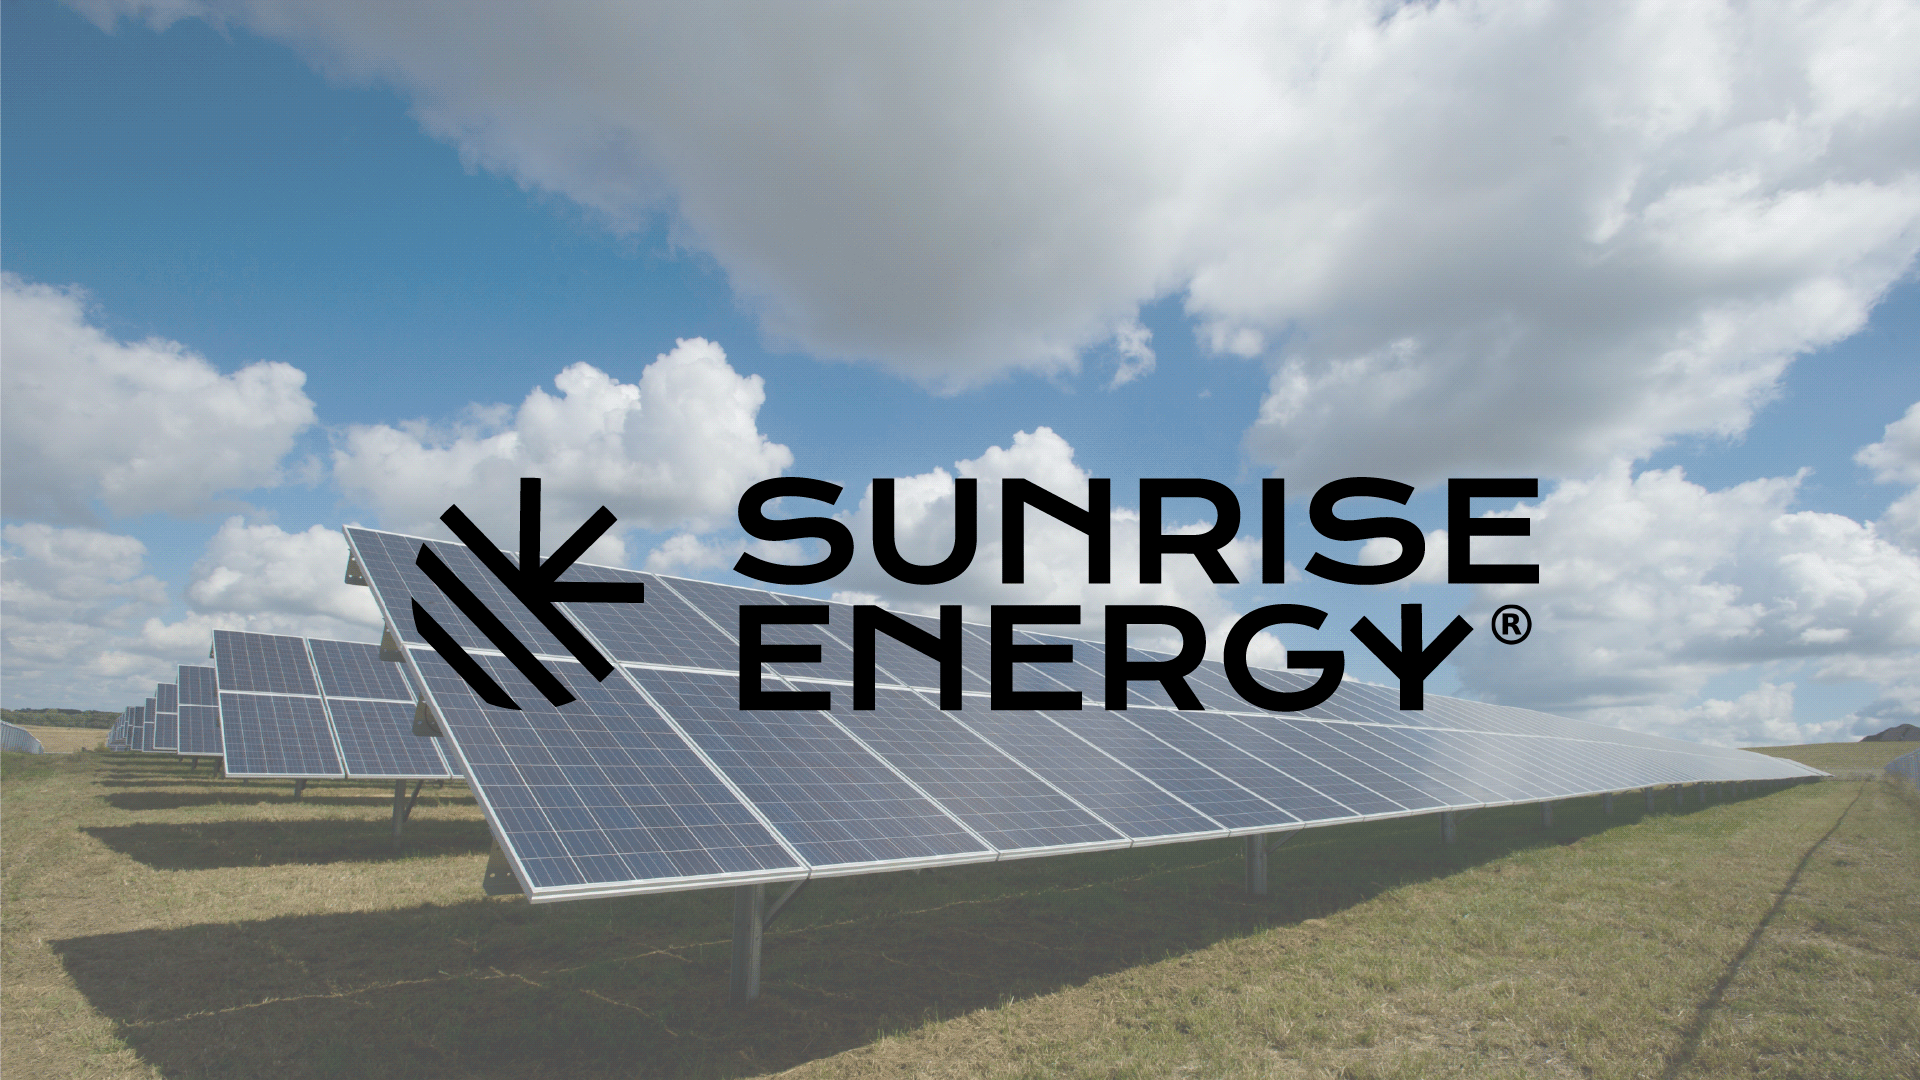 Sunrise energy logo design